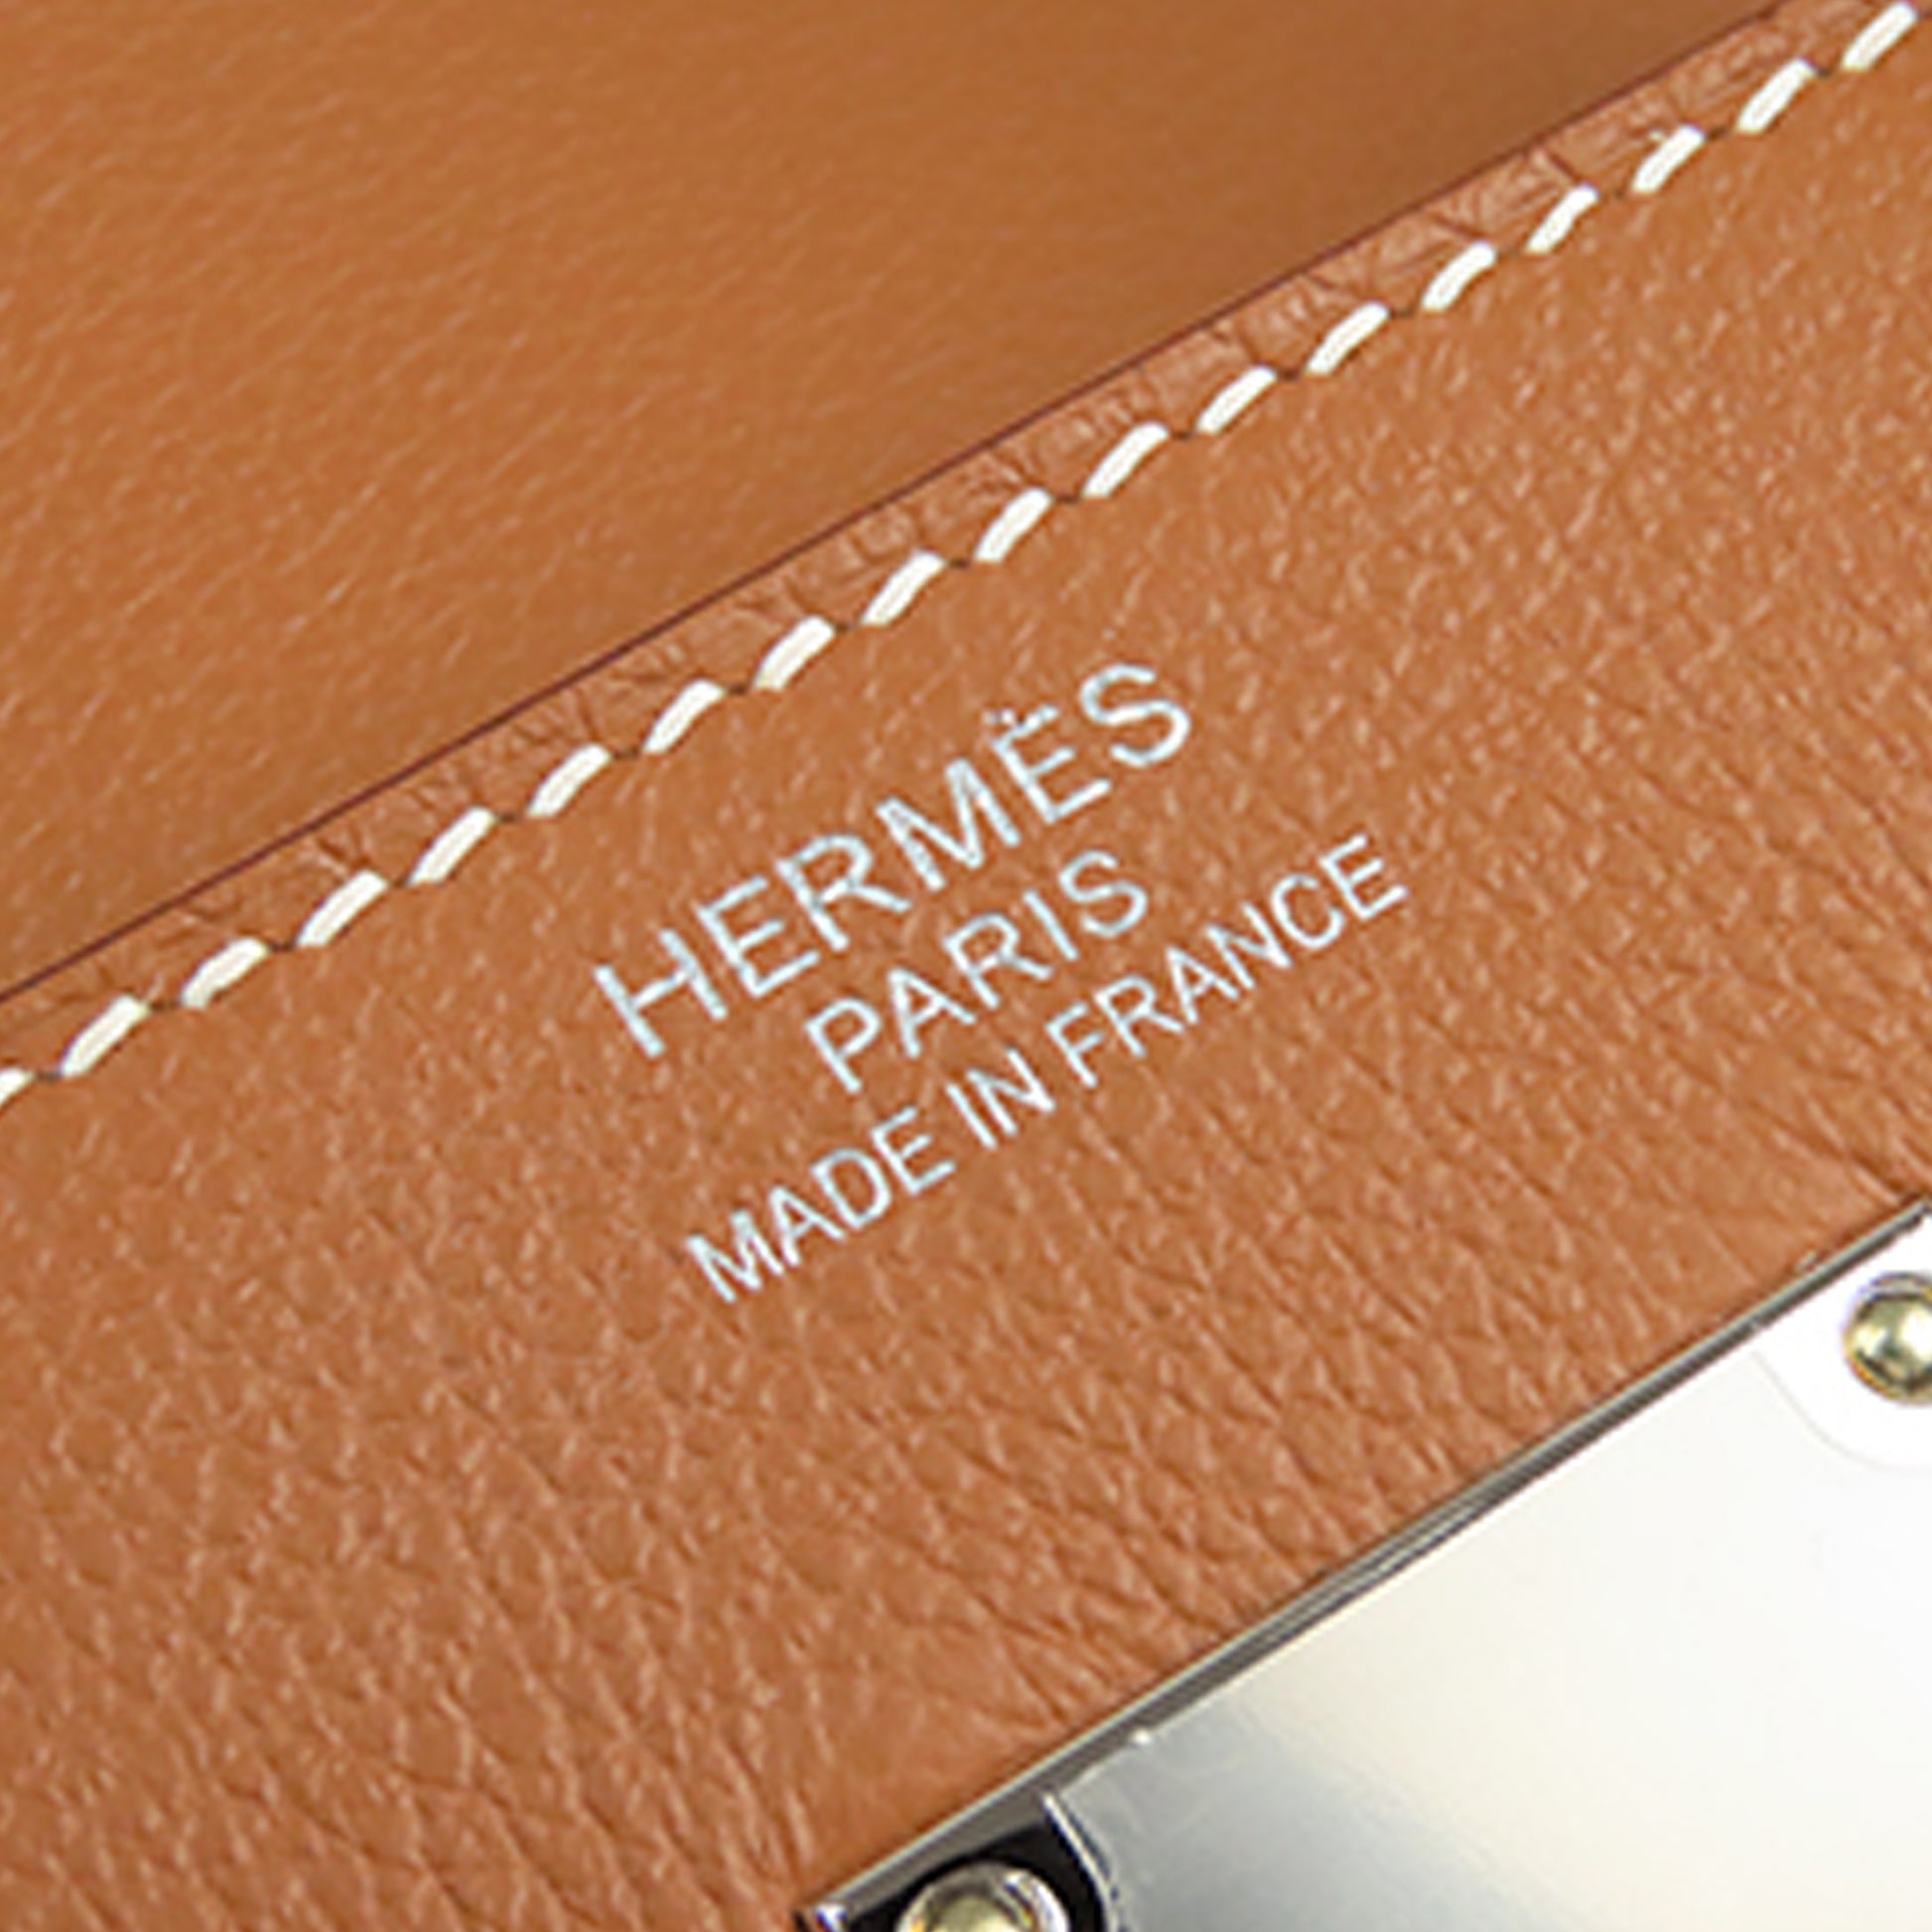 Galaxy luxury - Hermes birkin HAC 40 canvas $93800